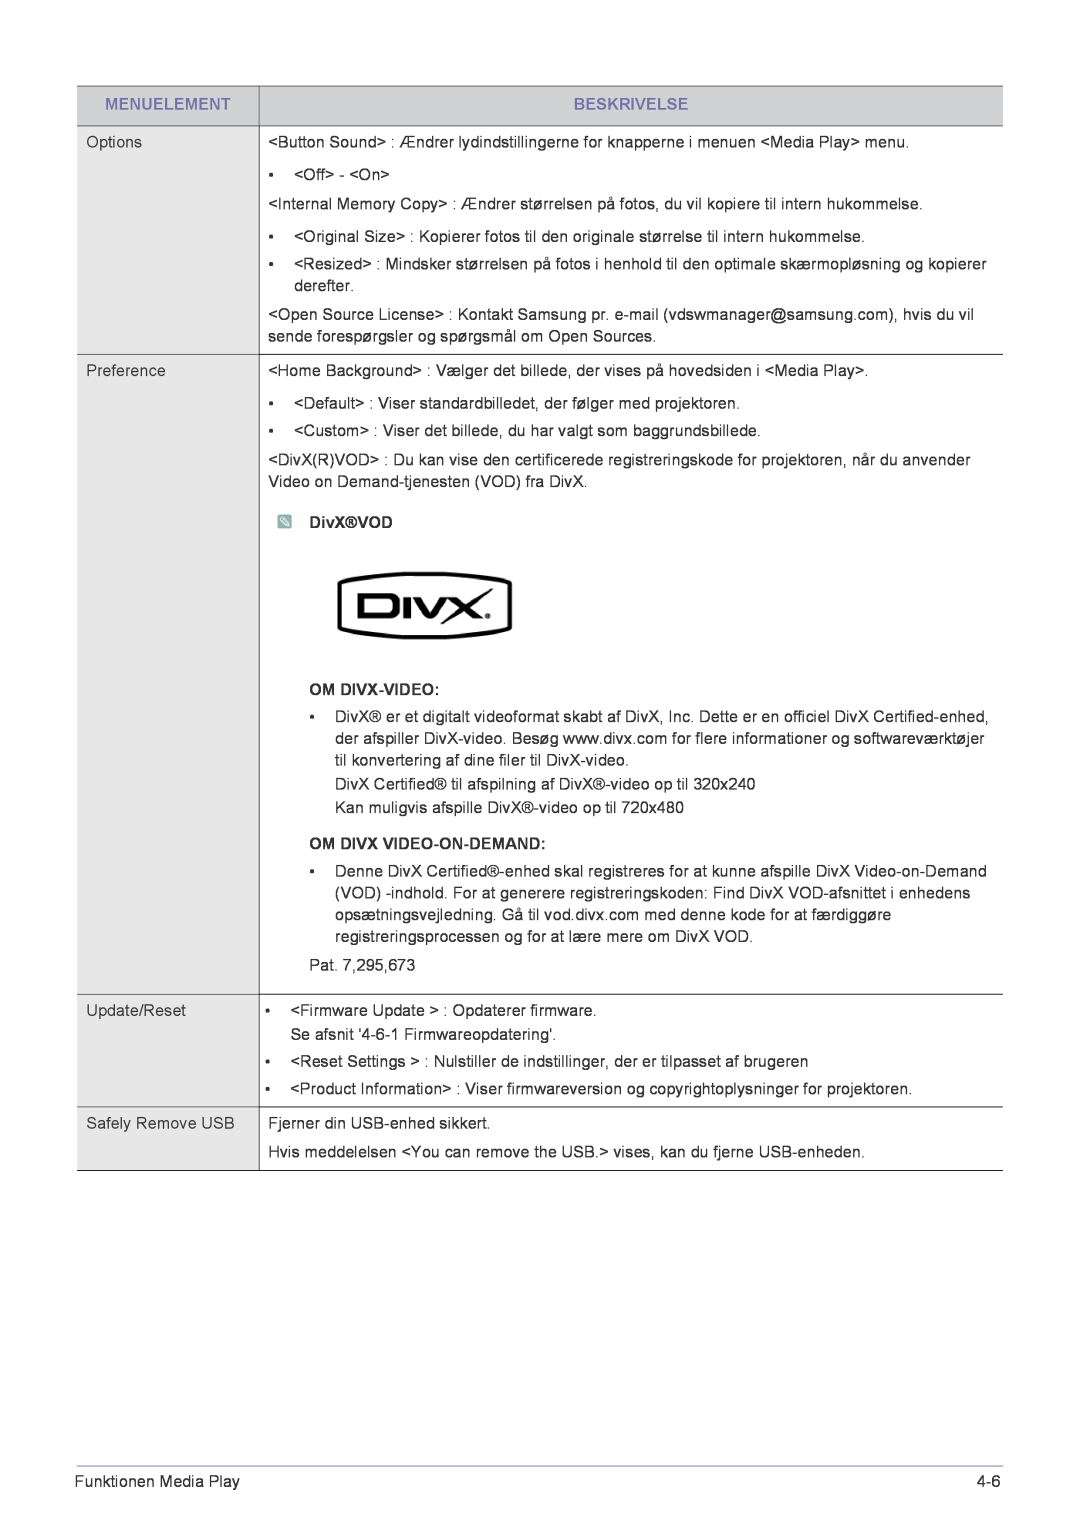 Samsung SP2553XWCX/EN manual Menuelement, Beskrivelse, DivXVOD, Om Divx-Video, Om Divx Video-On-Demand 